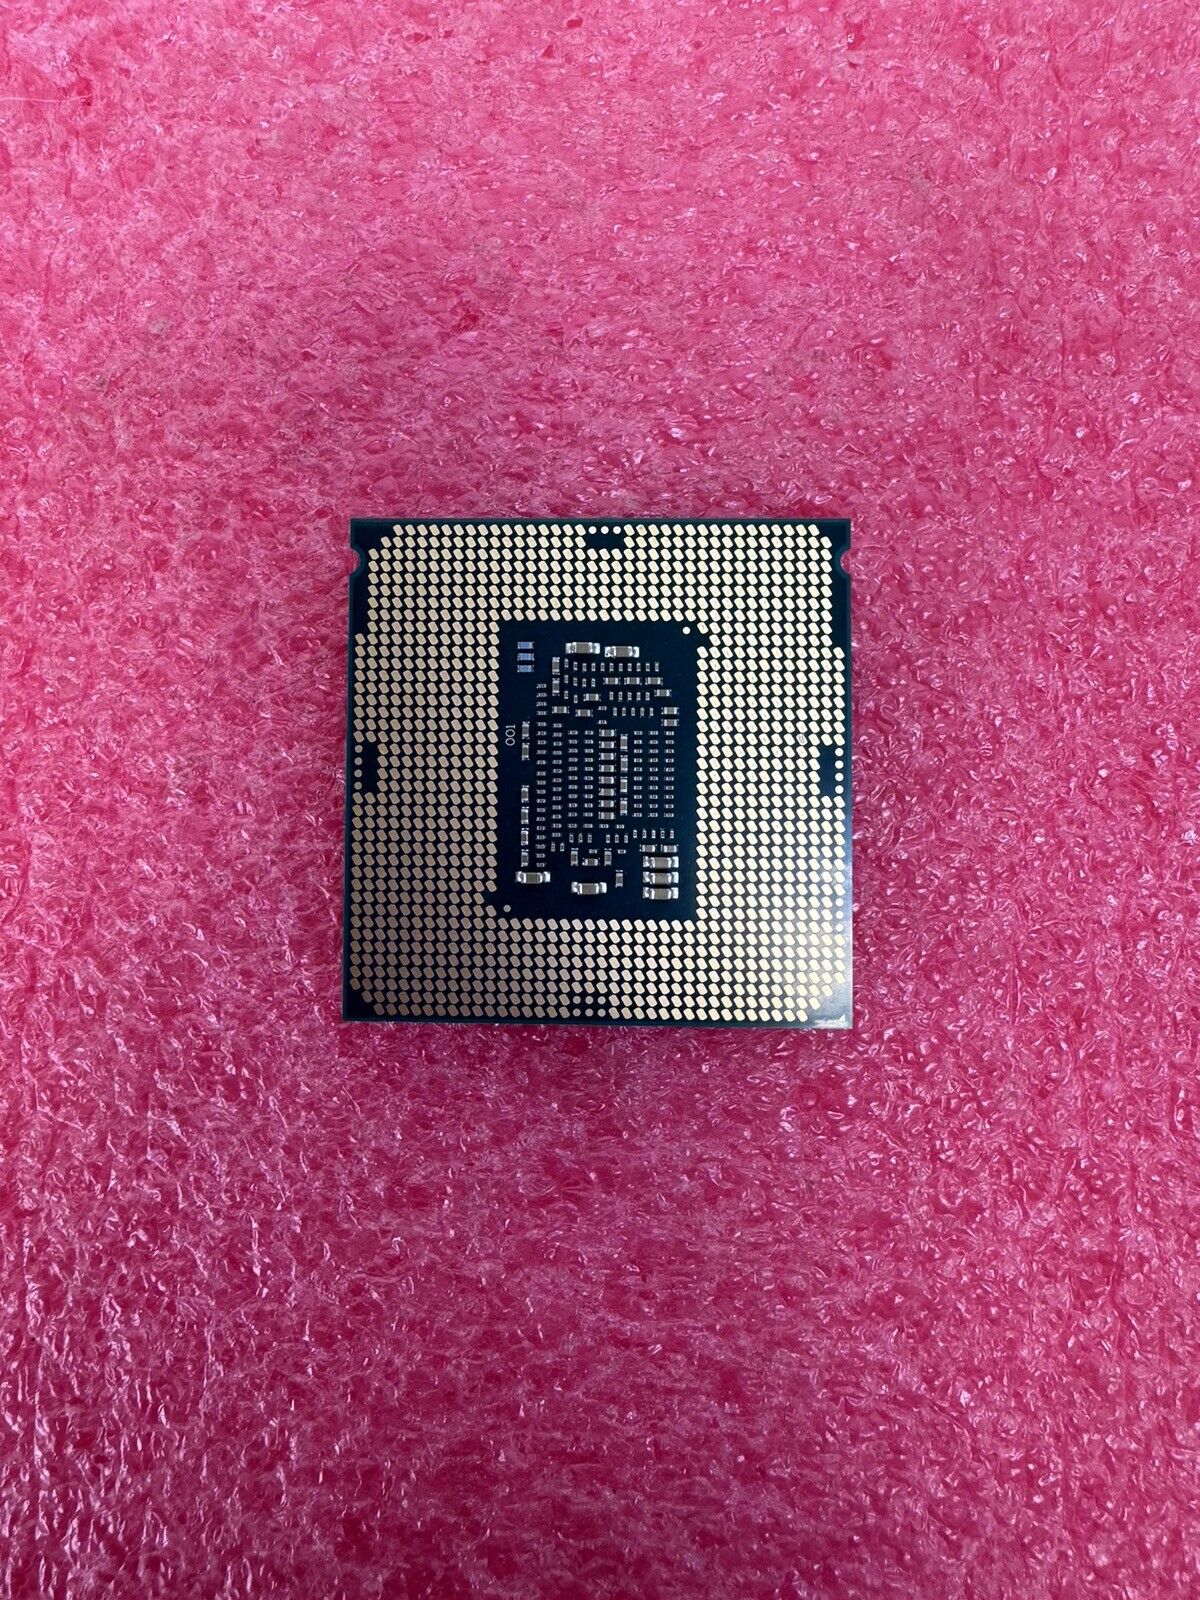 Intel Core i5-7500 SR335 3.4GHz Processor